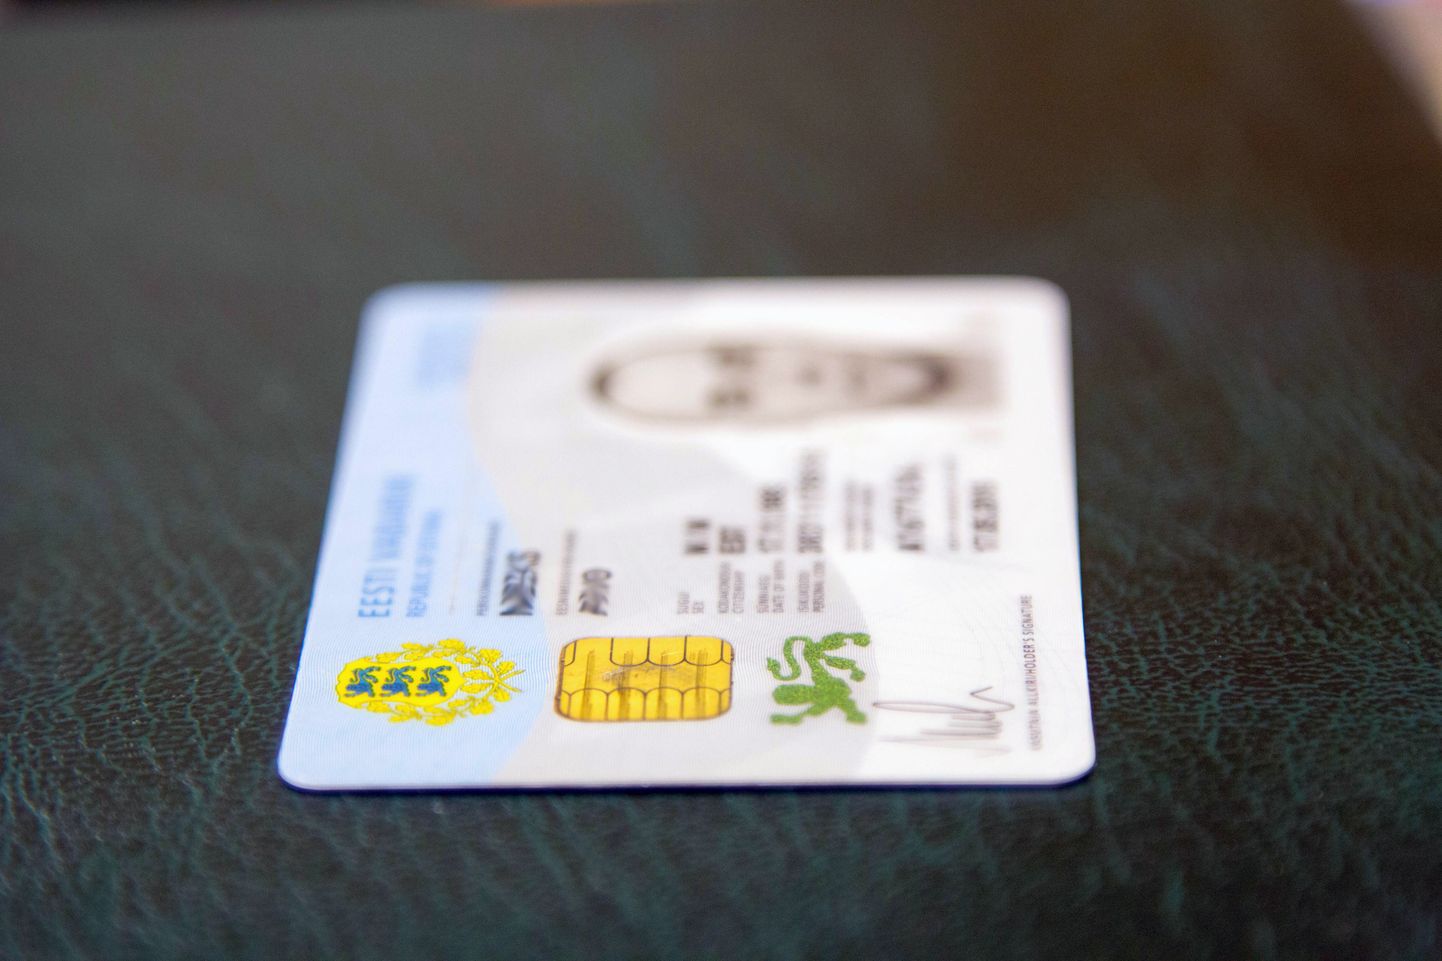 Eesti ID-kaart.